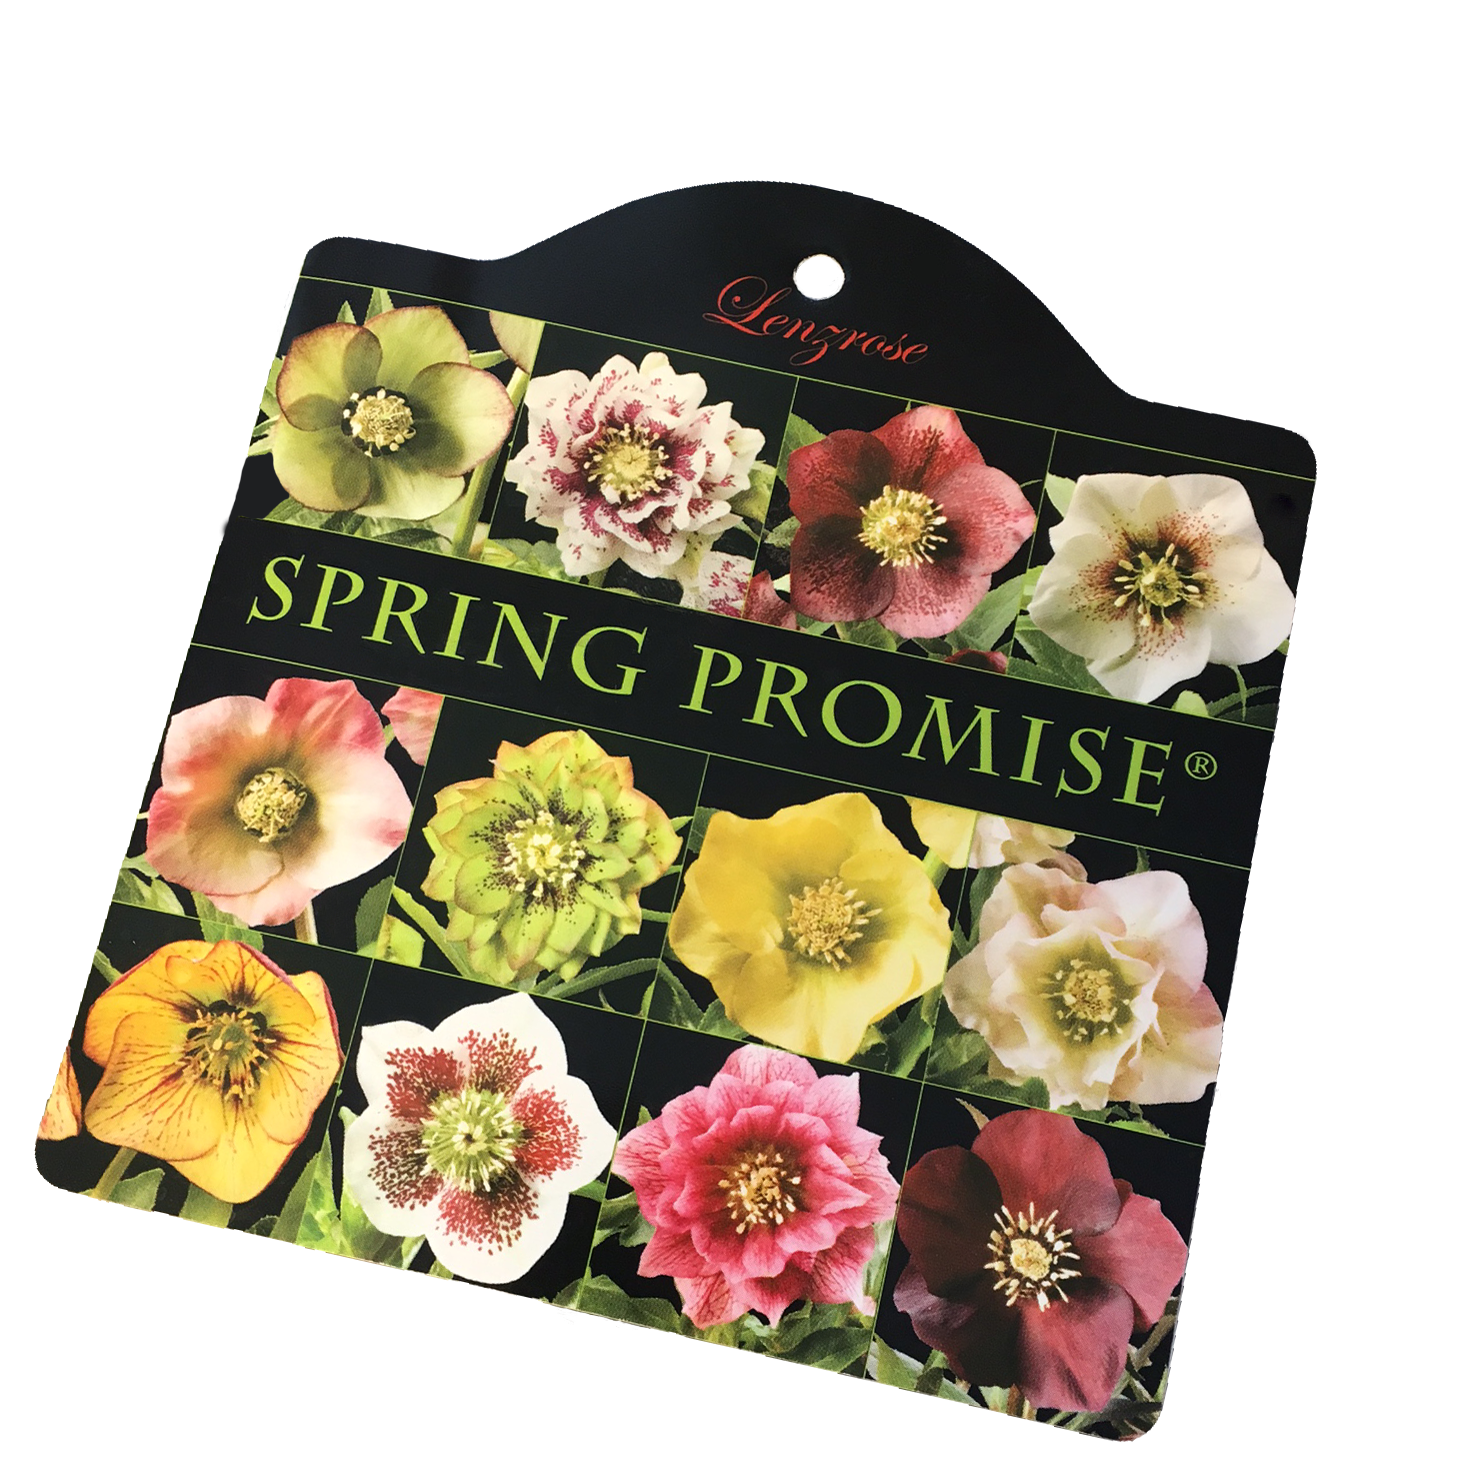 Range of Spring Promise® Lenten Rose varieties